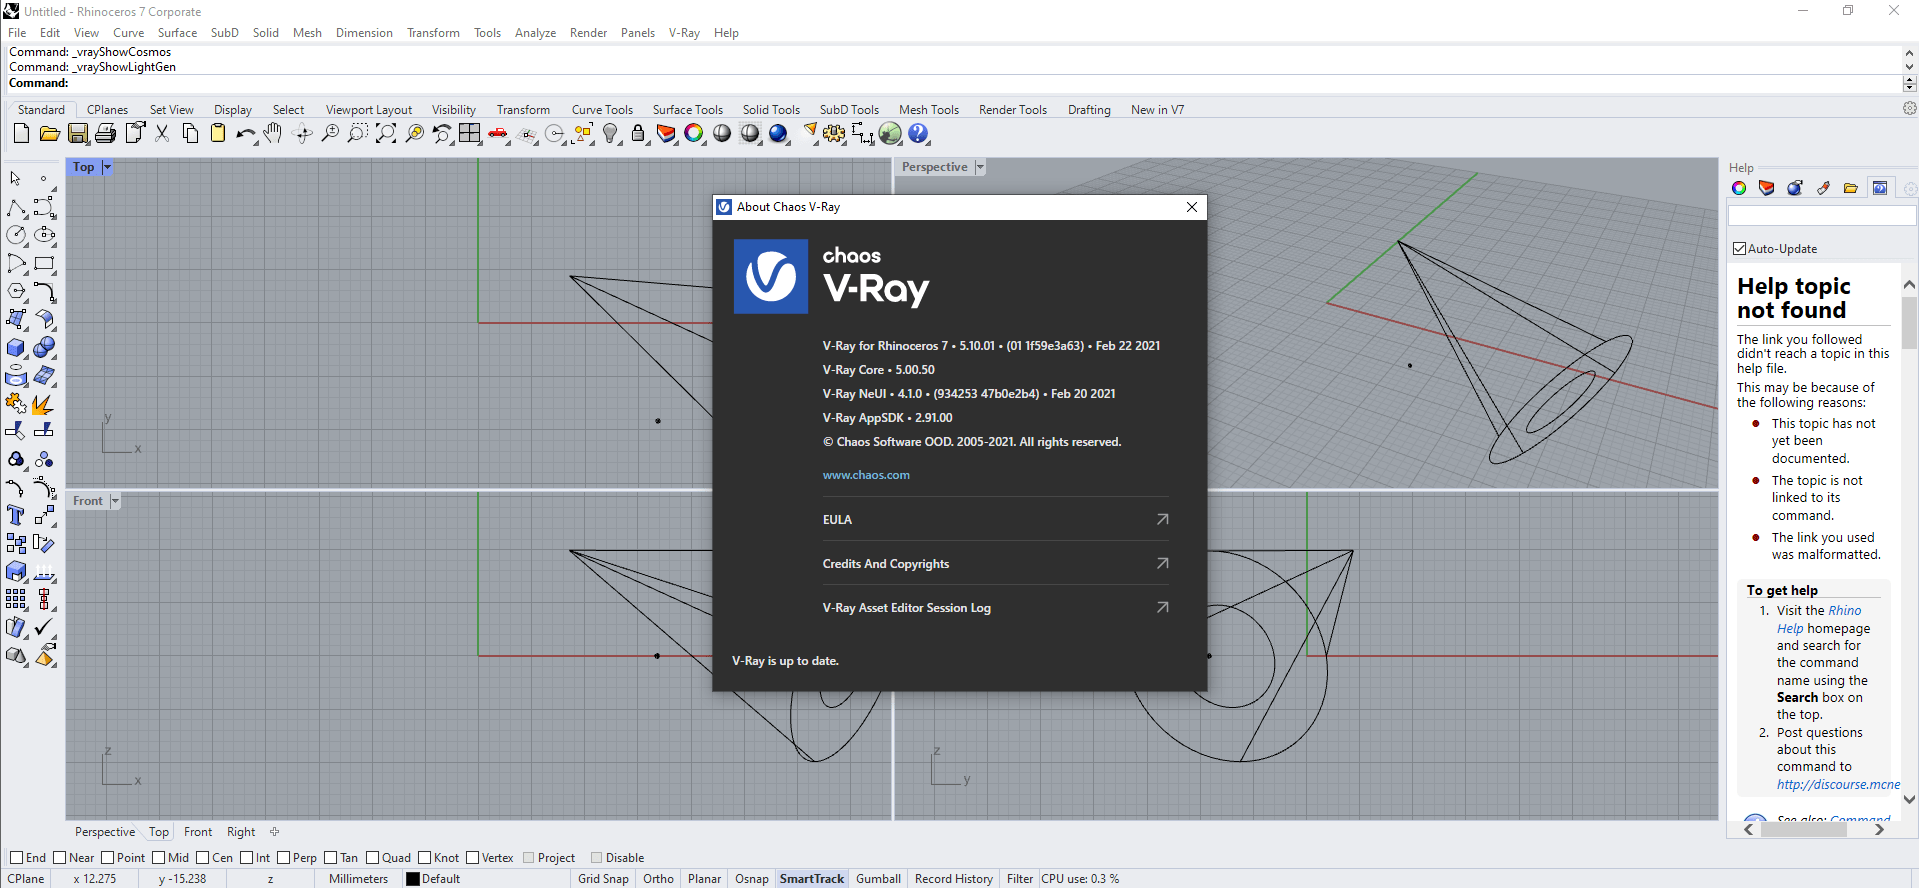 V-Ray 5.10.01 for Rhinoceros 6-7